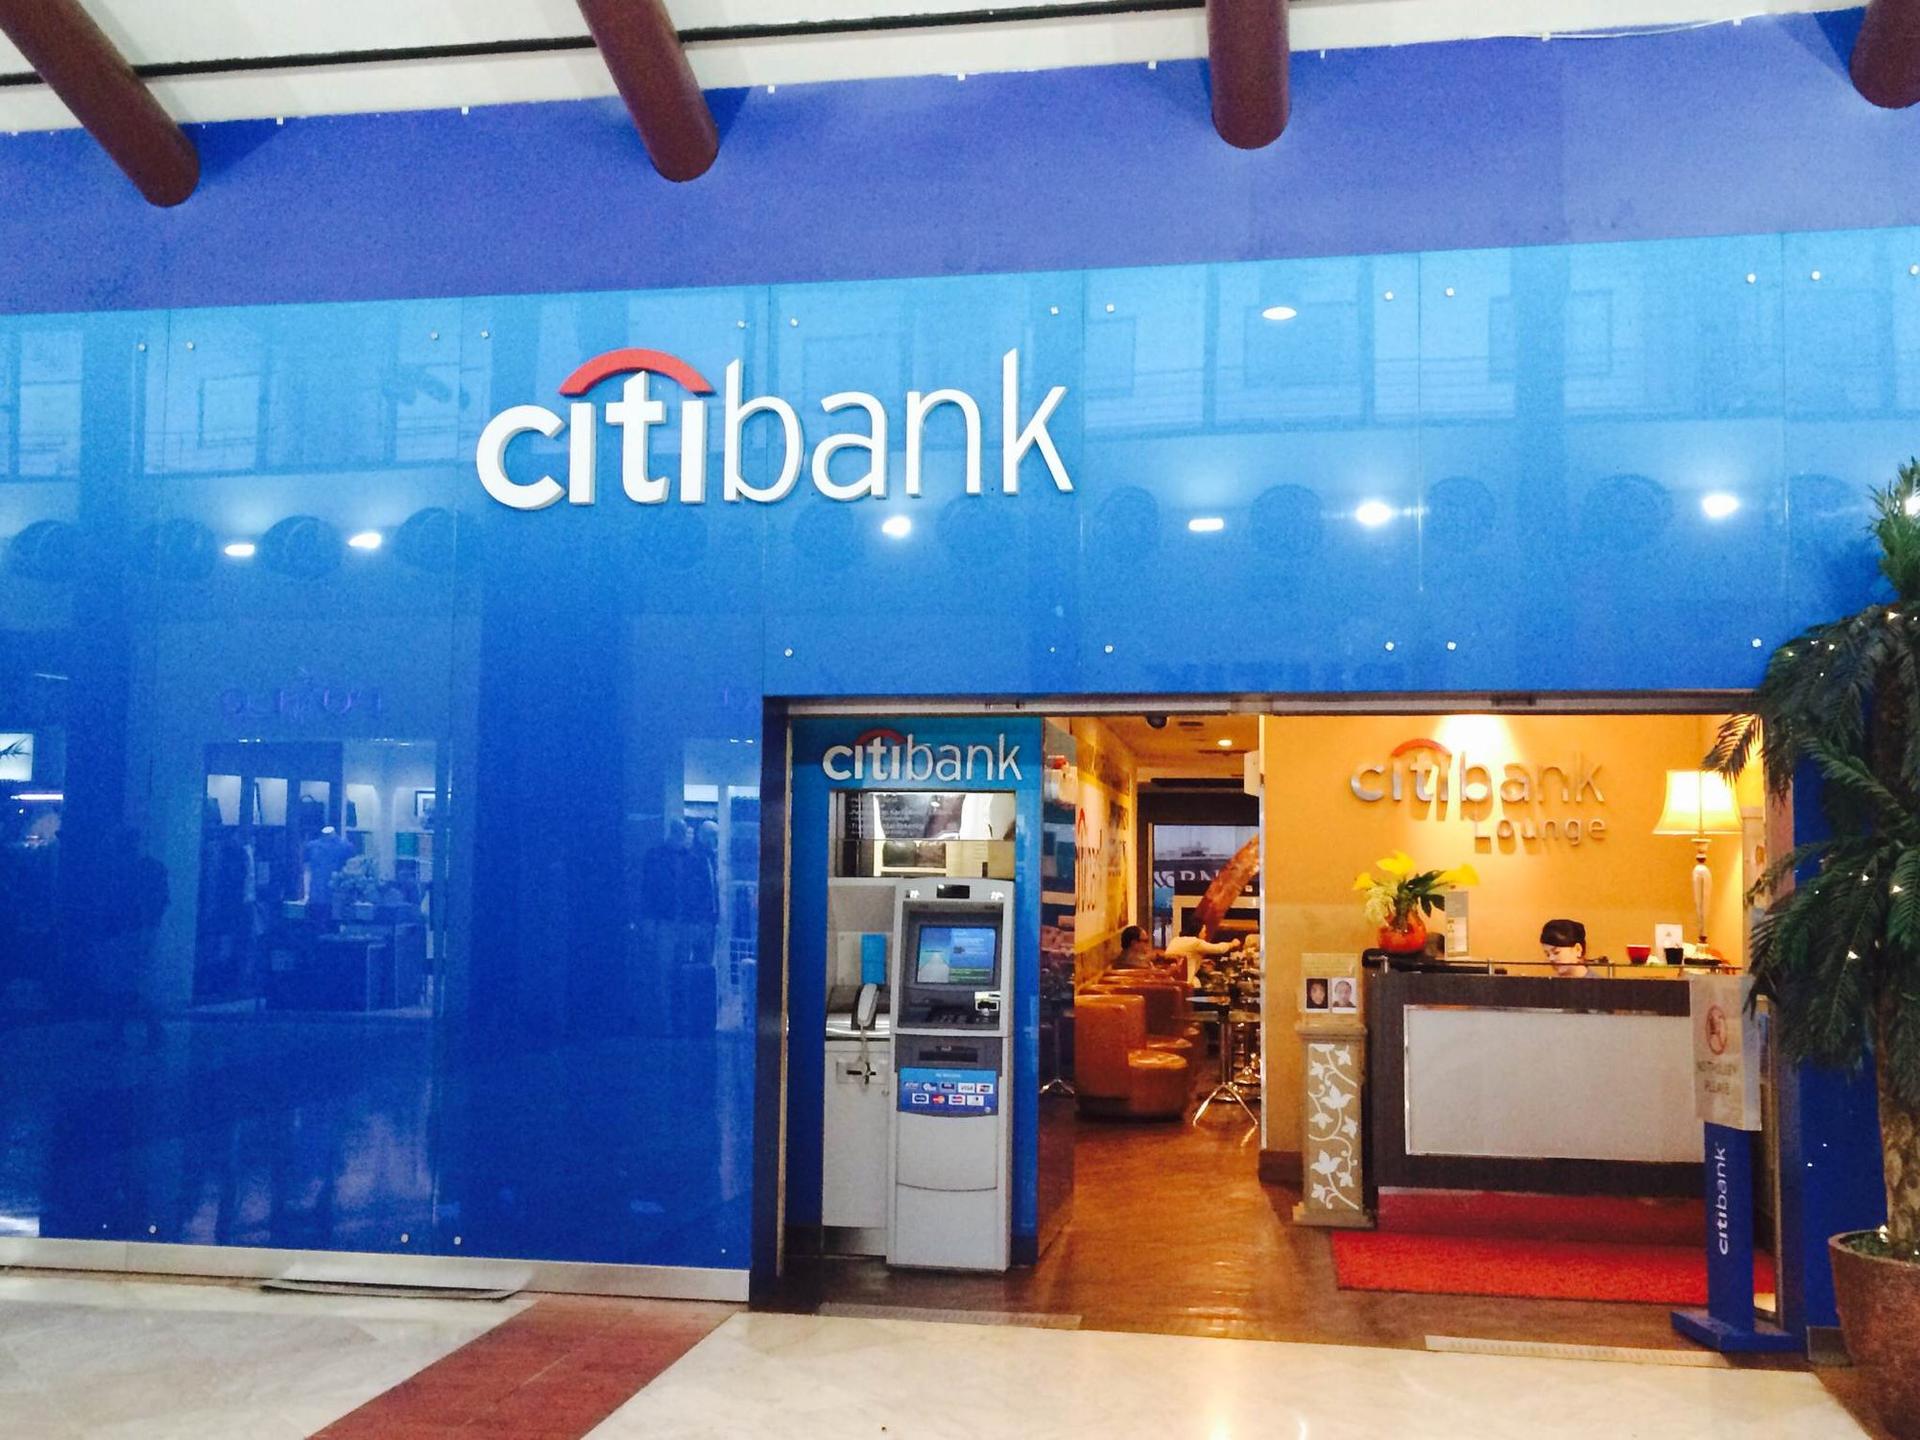 Citibank Lounge image 2 of 4